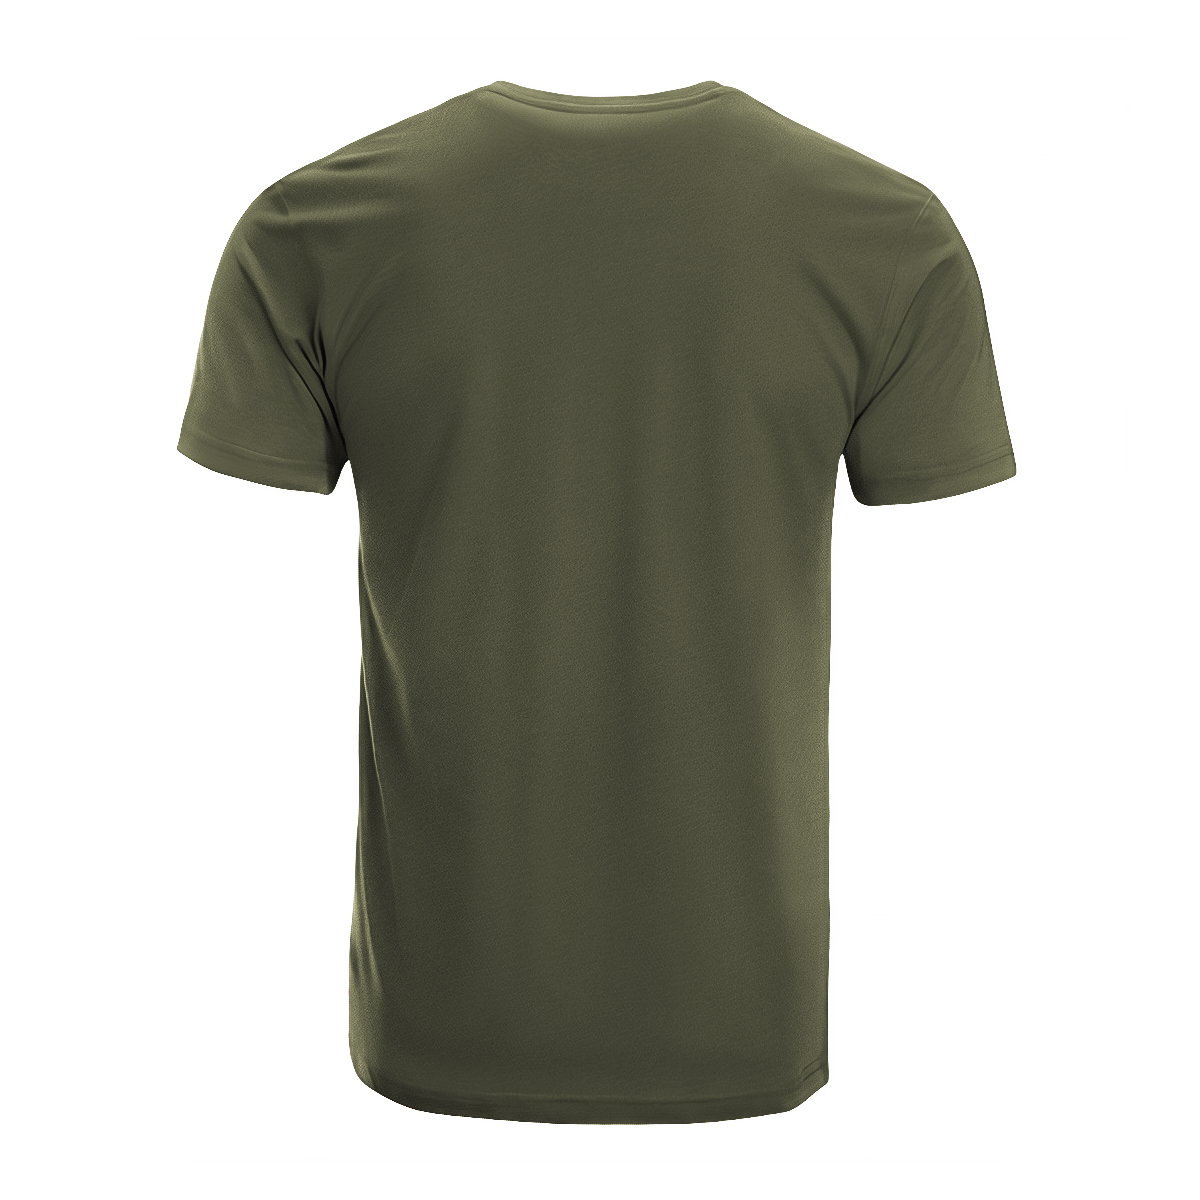 Chisholm Tartan Crest T-shirt - I'm not yelling style